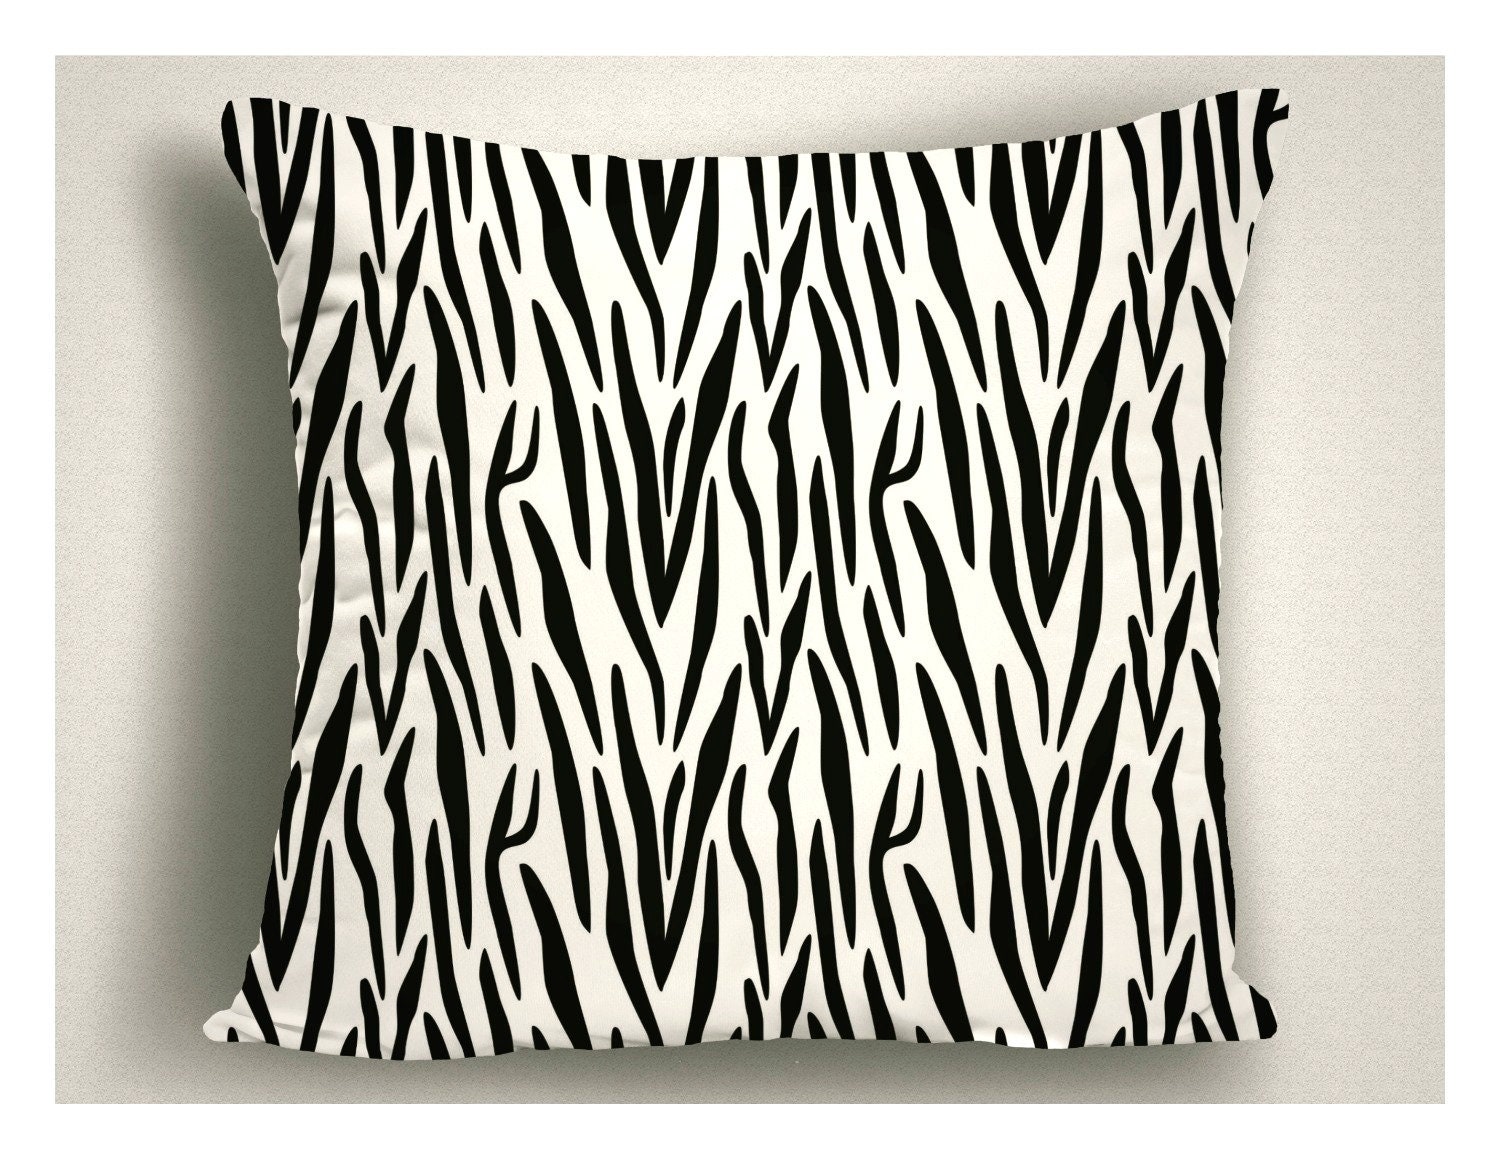 Zebra Print Man Cave Pillow Animal Print Pillow Black And White